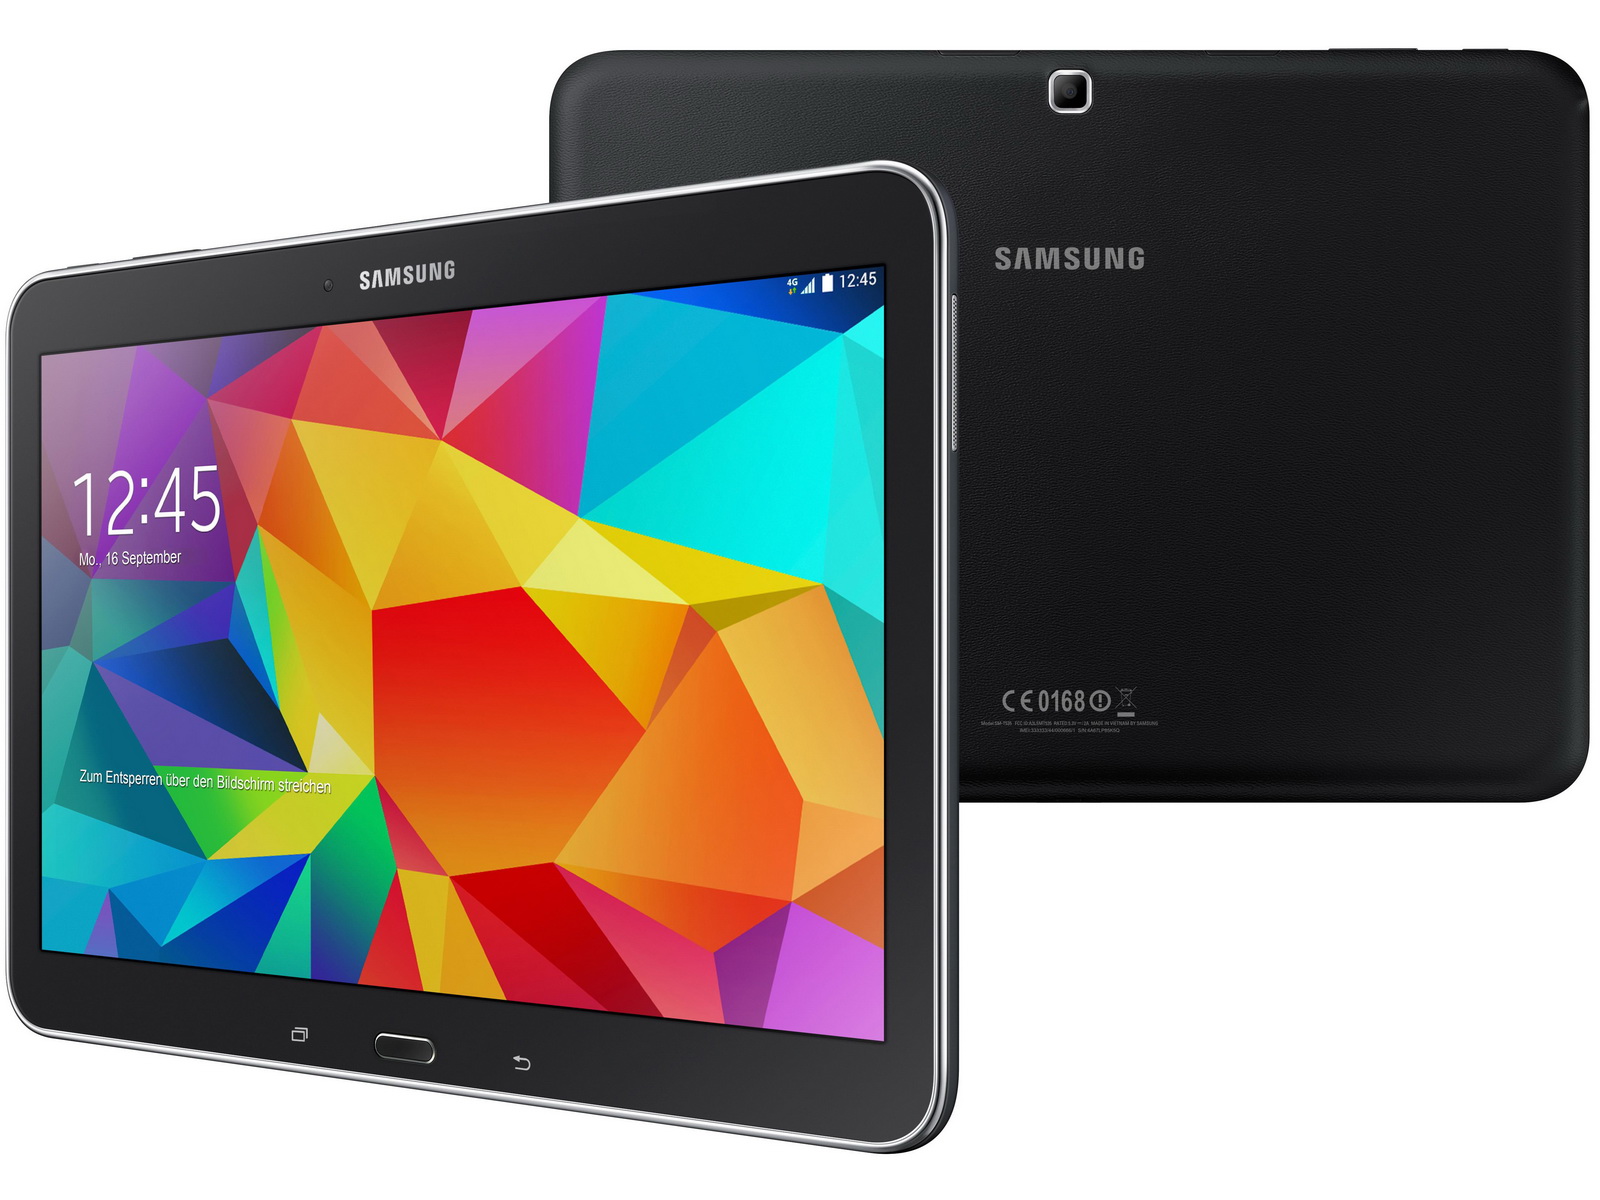 Samsung Galaxy Tab 4 10.1 Özellikleri – Technopat Veritabanı